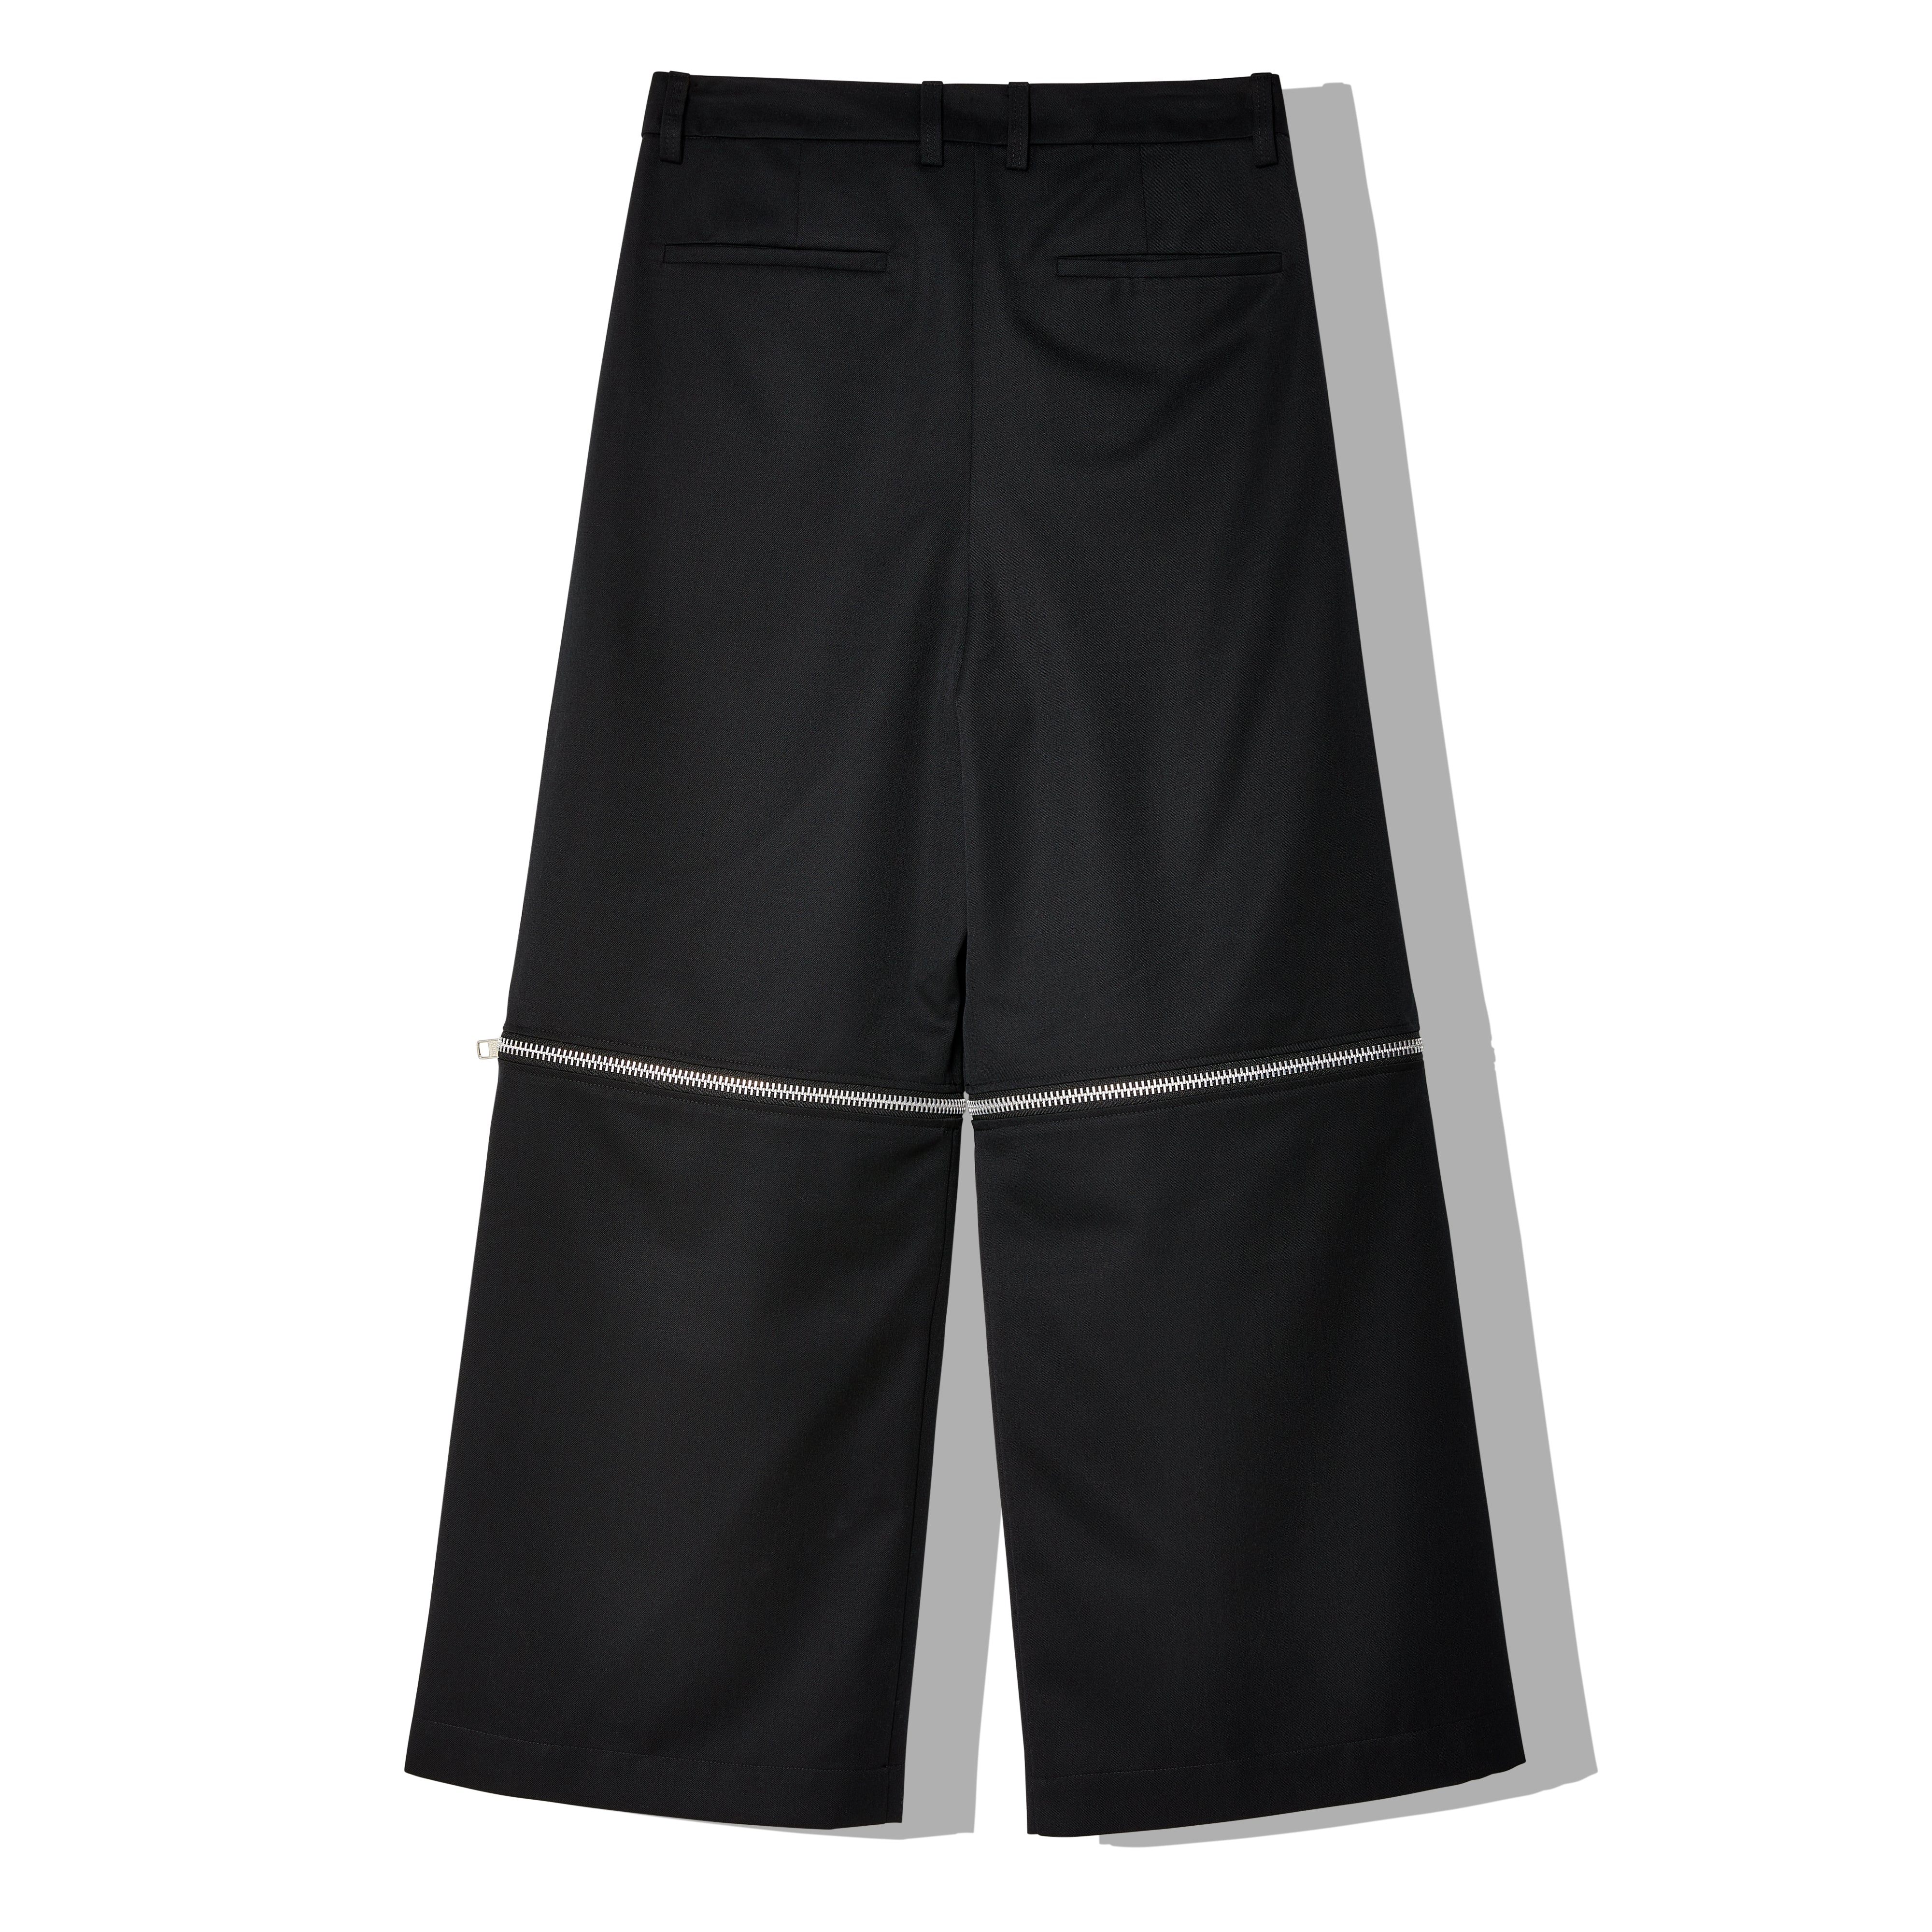 Vaquera - Women's Zipper Trousers - (Black)